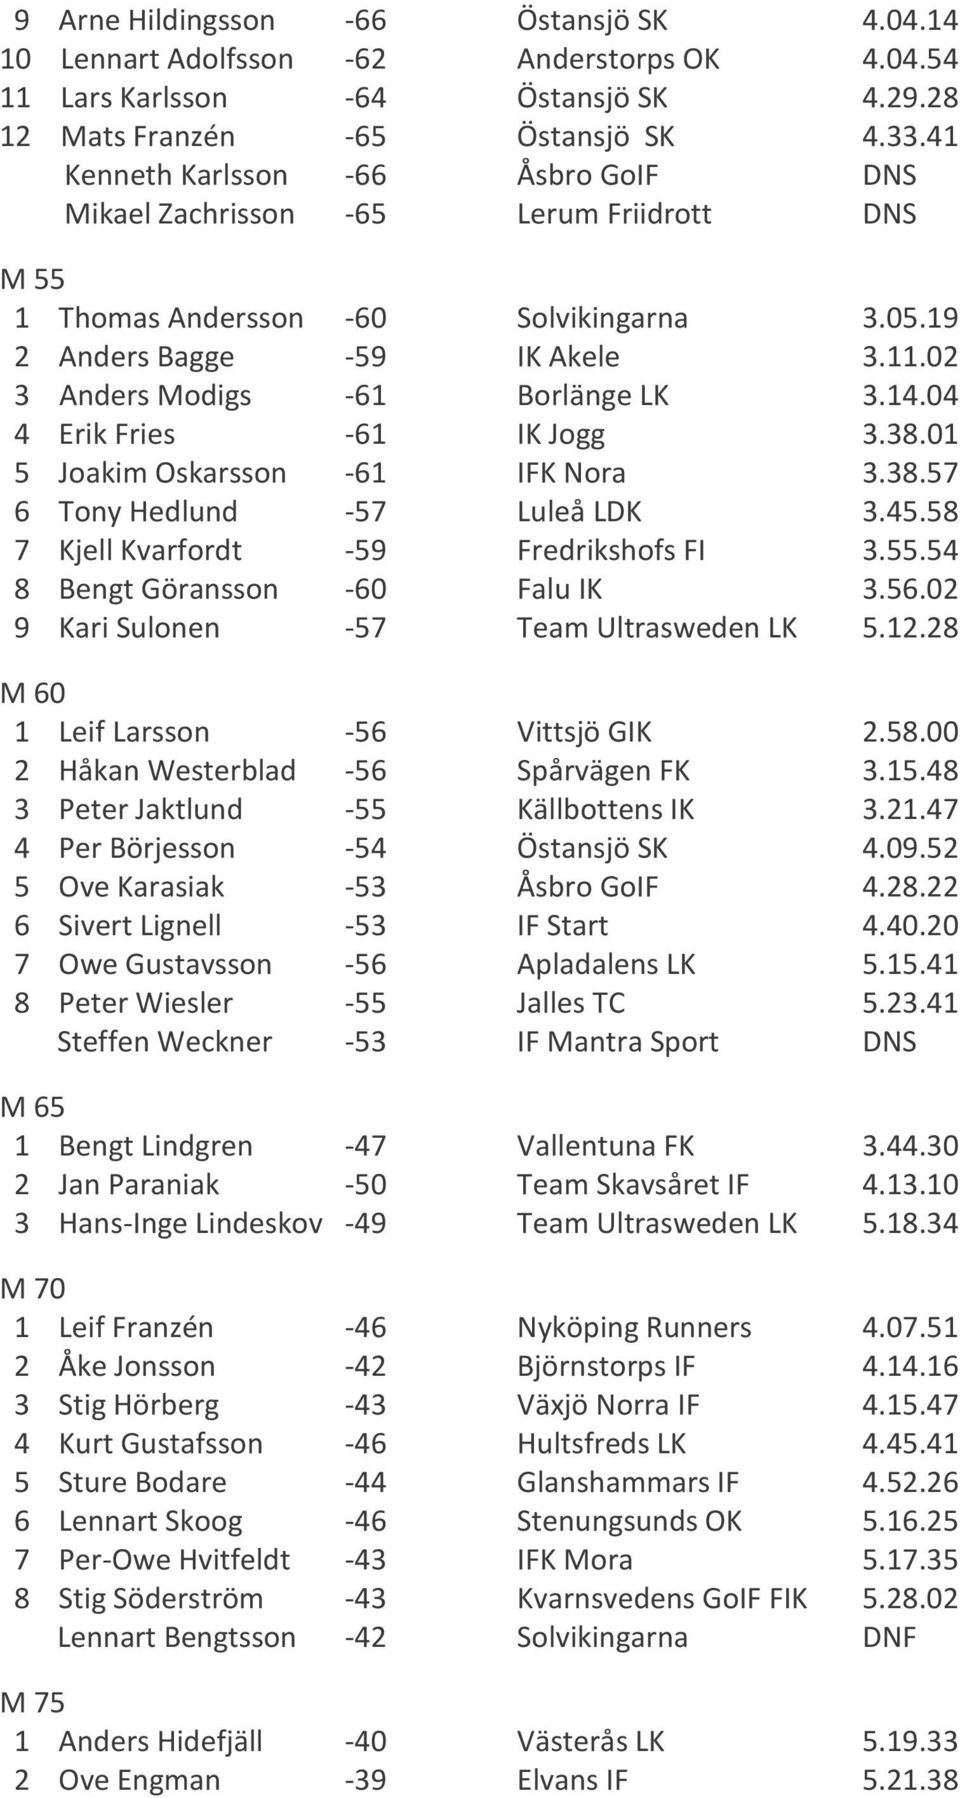 02 3 Anders Modigs -61 Borlänge LK 3.14.04 4 Erik Fries -61 IK Jogg 3.38.01 5 Joakim Oskarsson -61 IFK Nora 3.38.57 6 Tony Hedlund -57 Luleå LDK 3.45.58 7 Kjell Kvarfordt -59 Fredrikshofs FI 3.55.